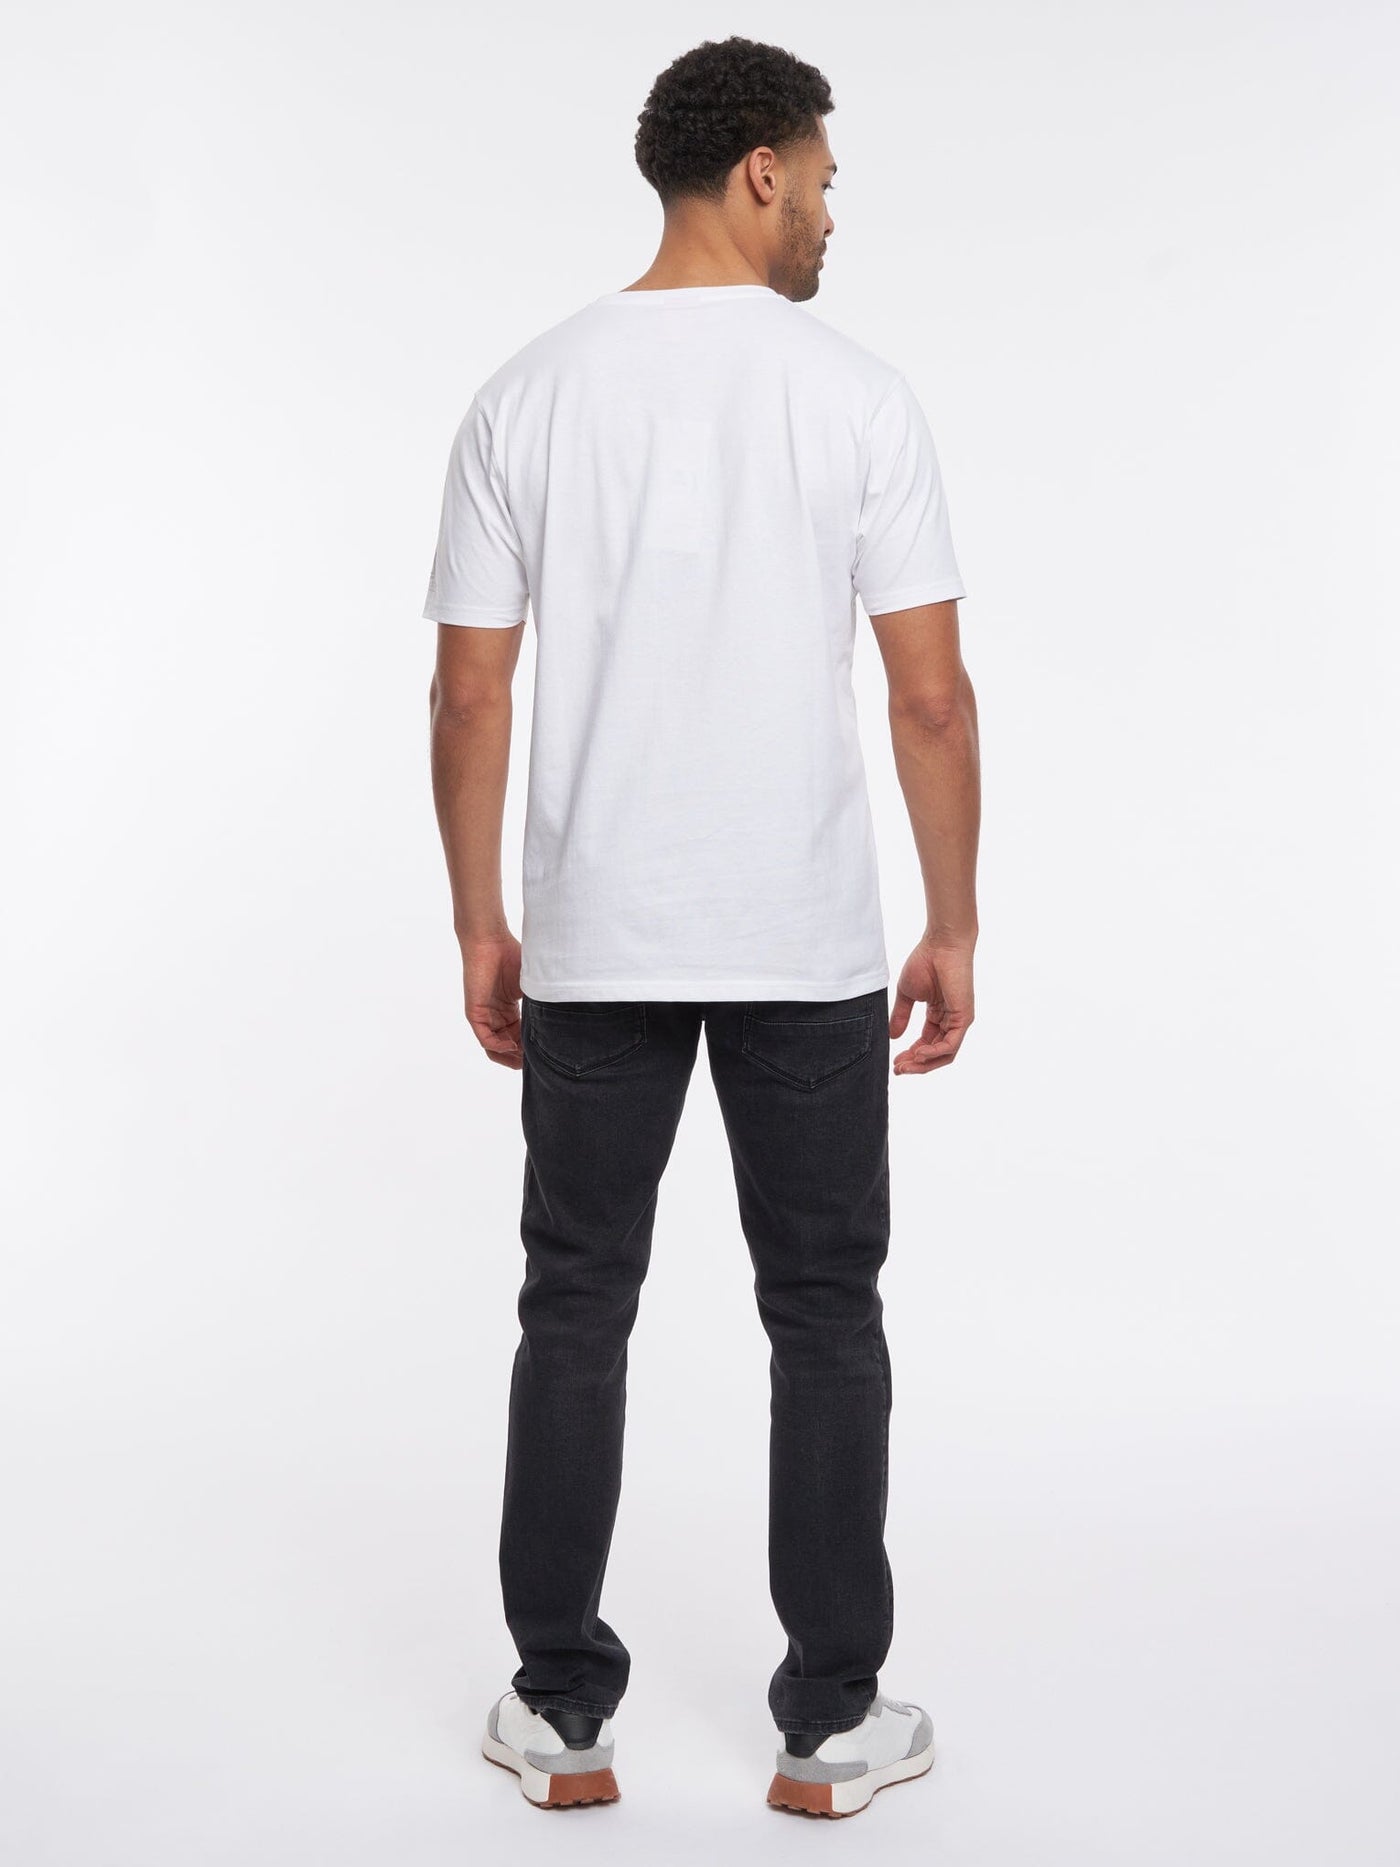 Chongtar T-Shirt White